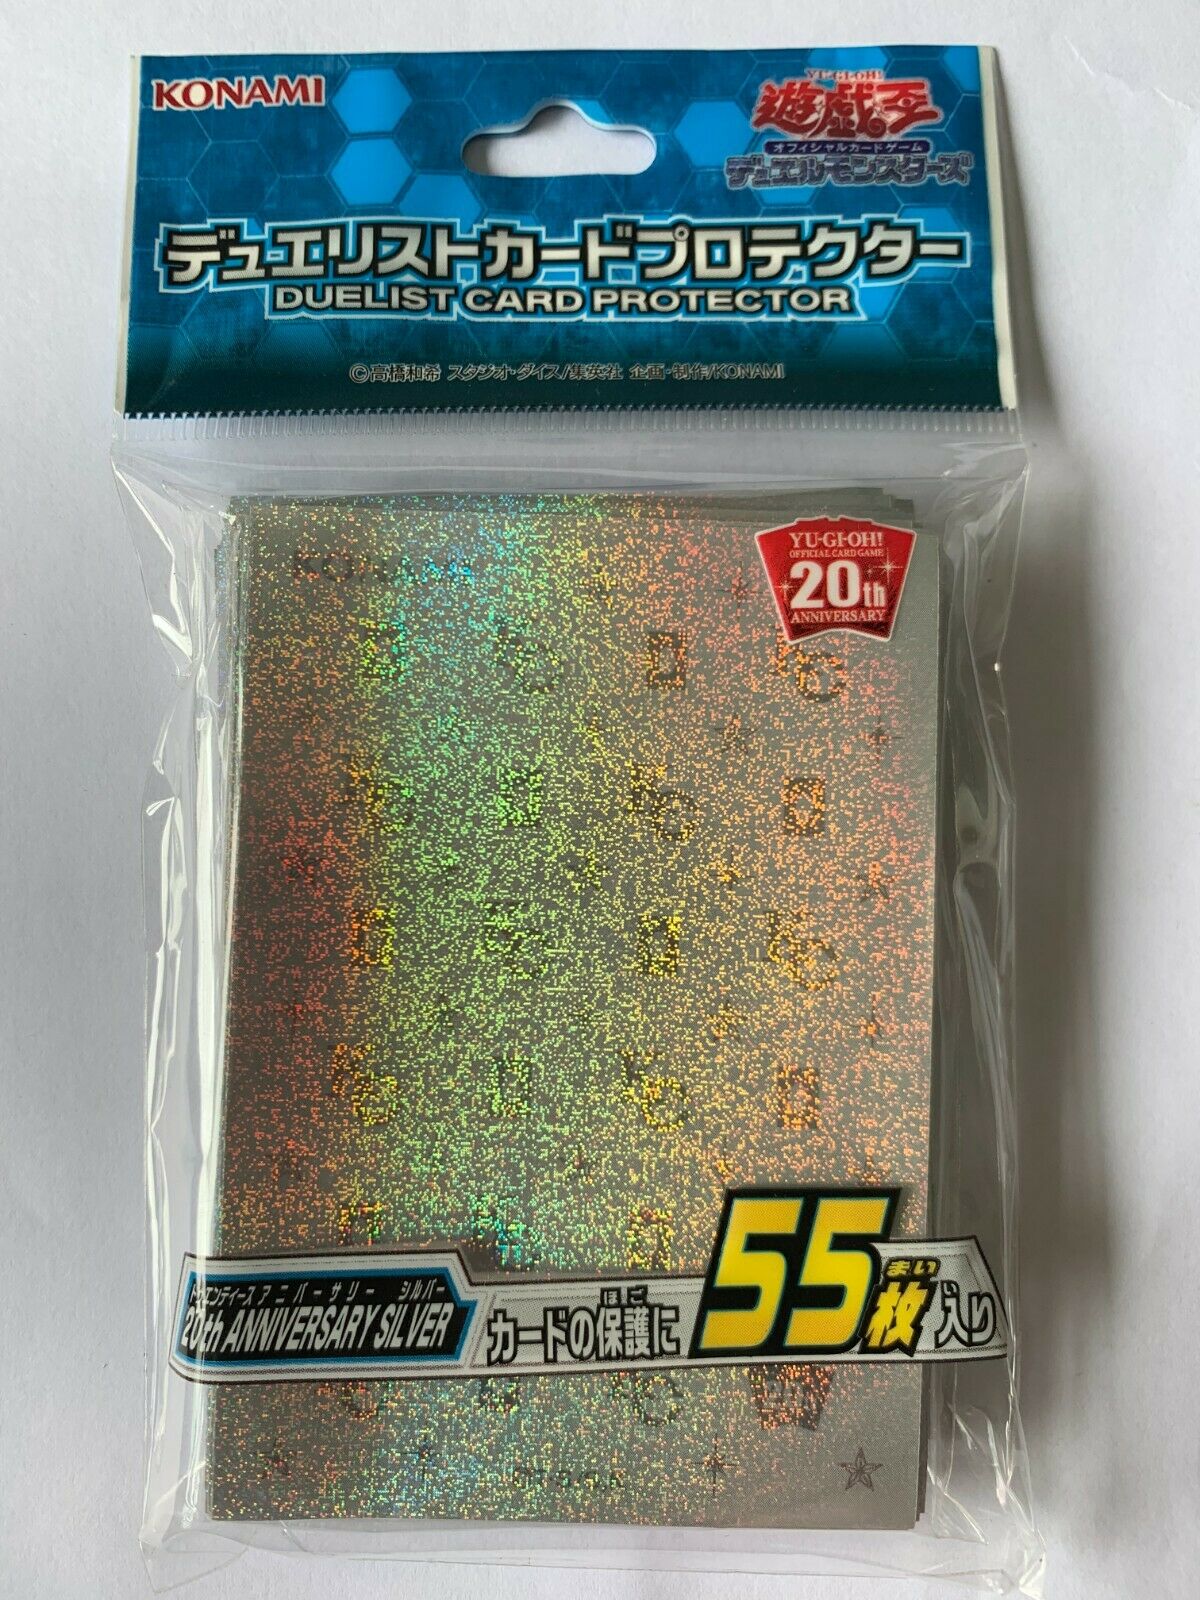 Yugioh Konami 55 Pcs Factory Sealed 20th Anniversary Kc Silver Sleeves Japanese